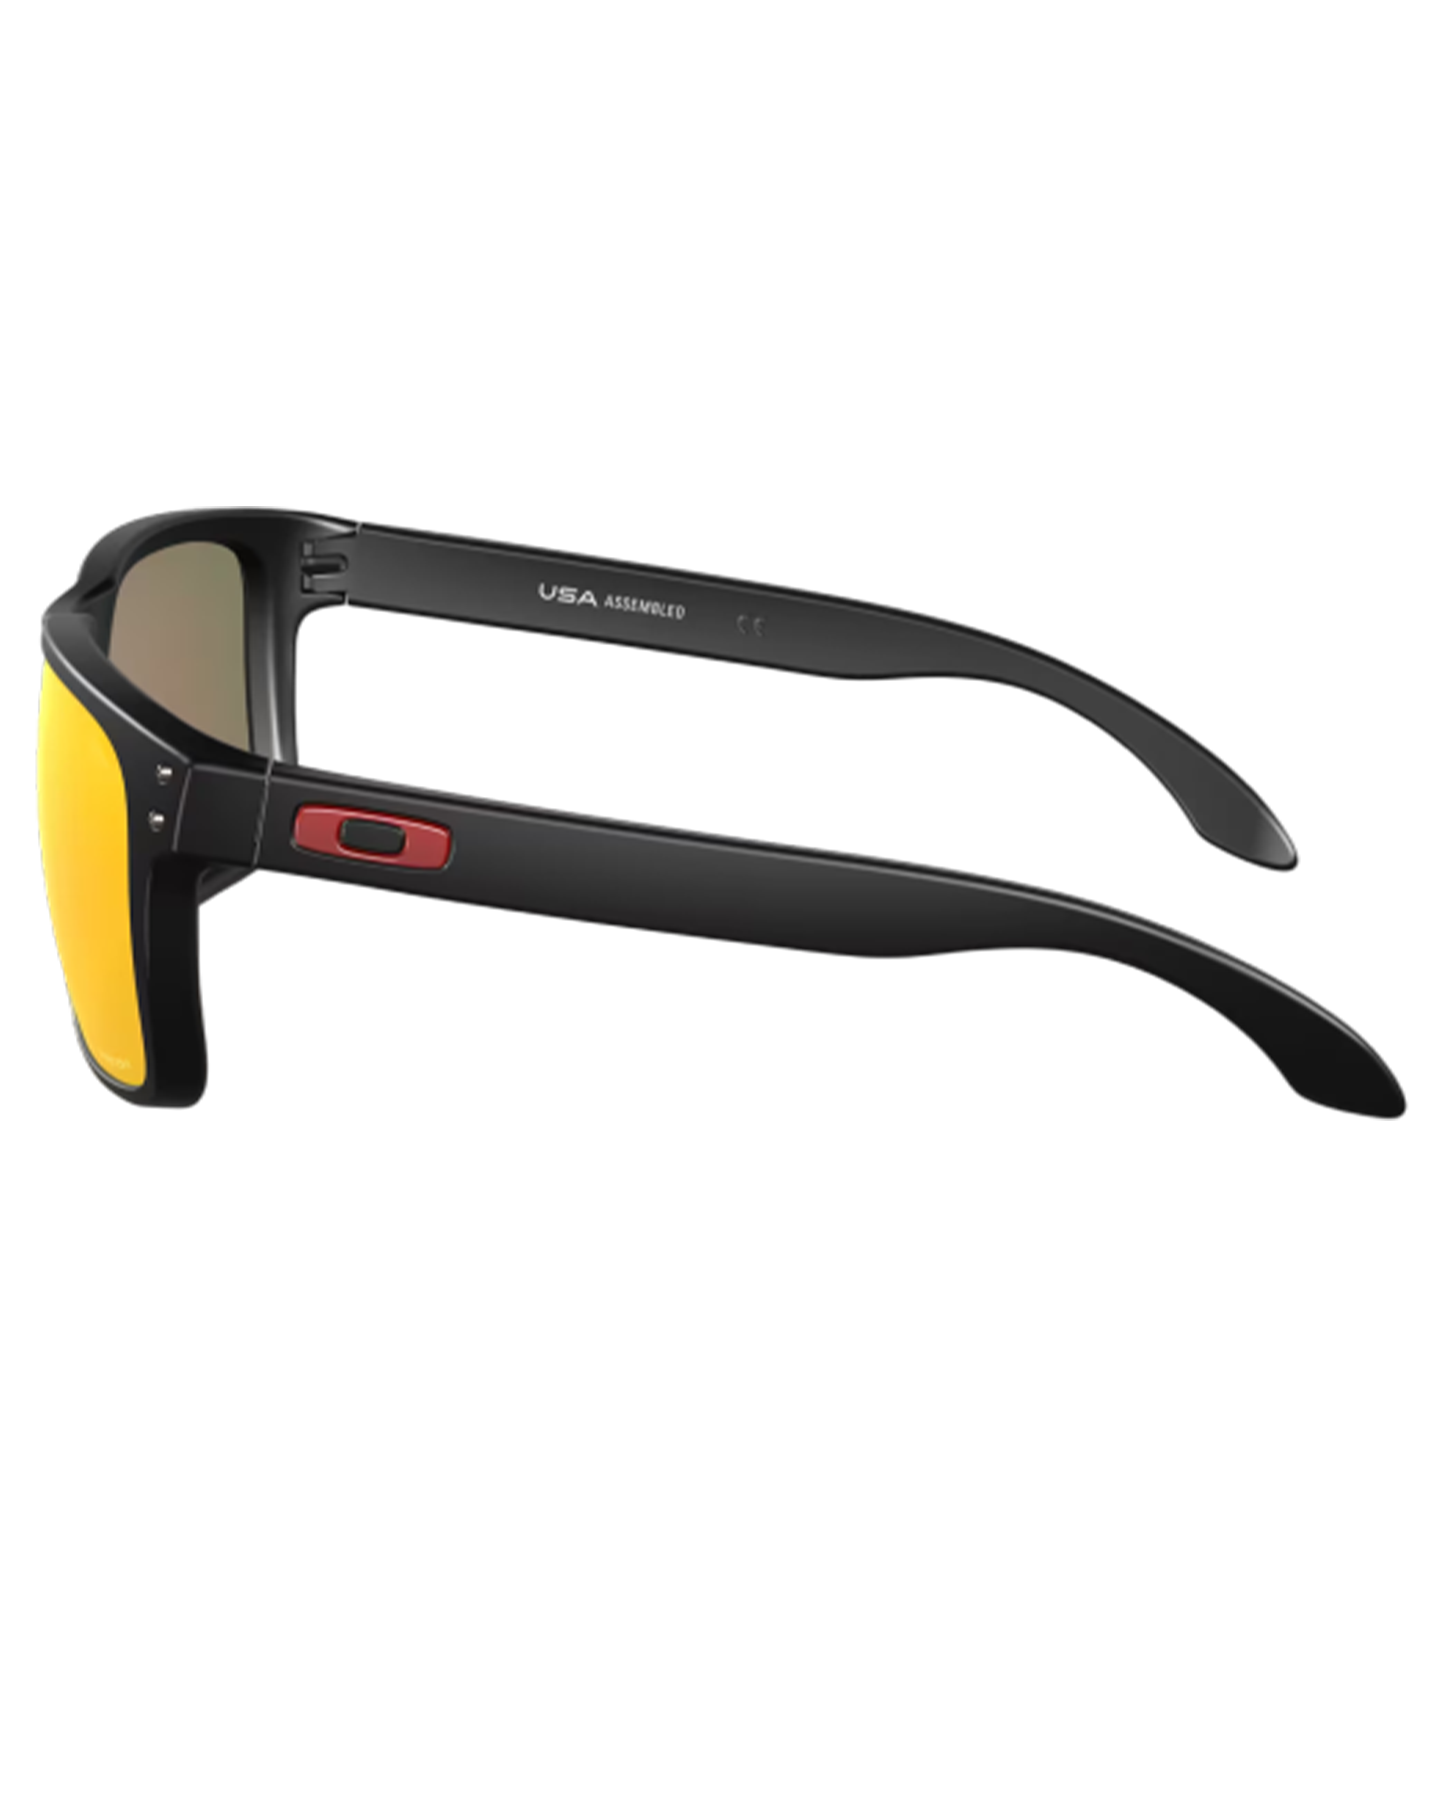 Oakley Holbrook Xl Matte Black W/ Prizm Ruby Lens Sunglasses - Trojan Wake Ski Snow